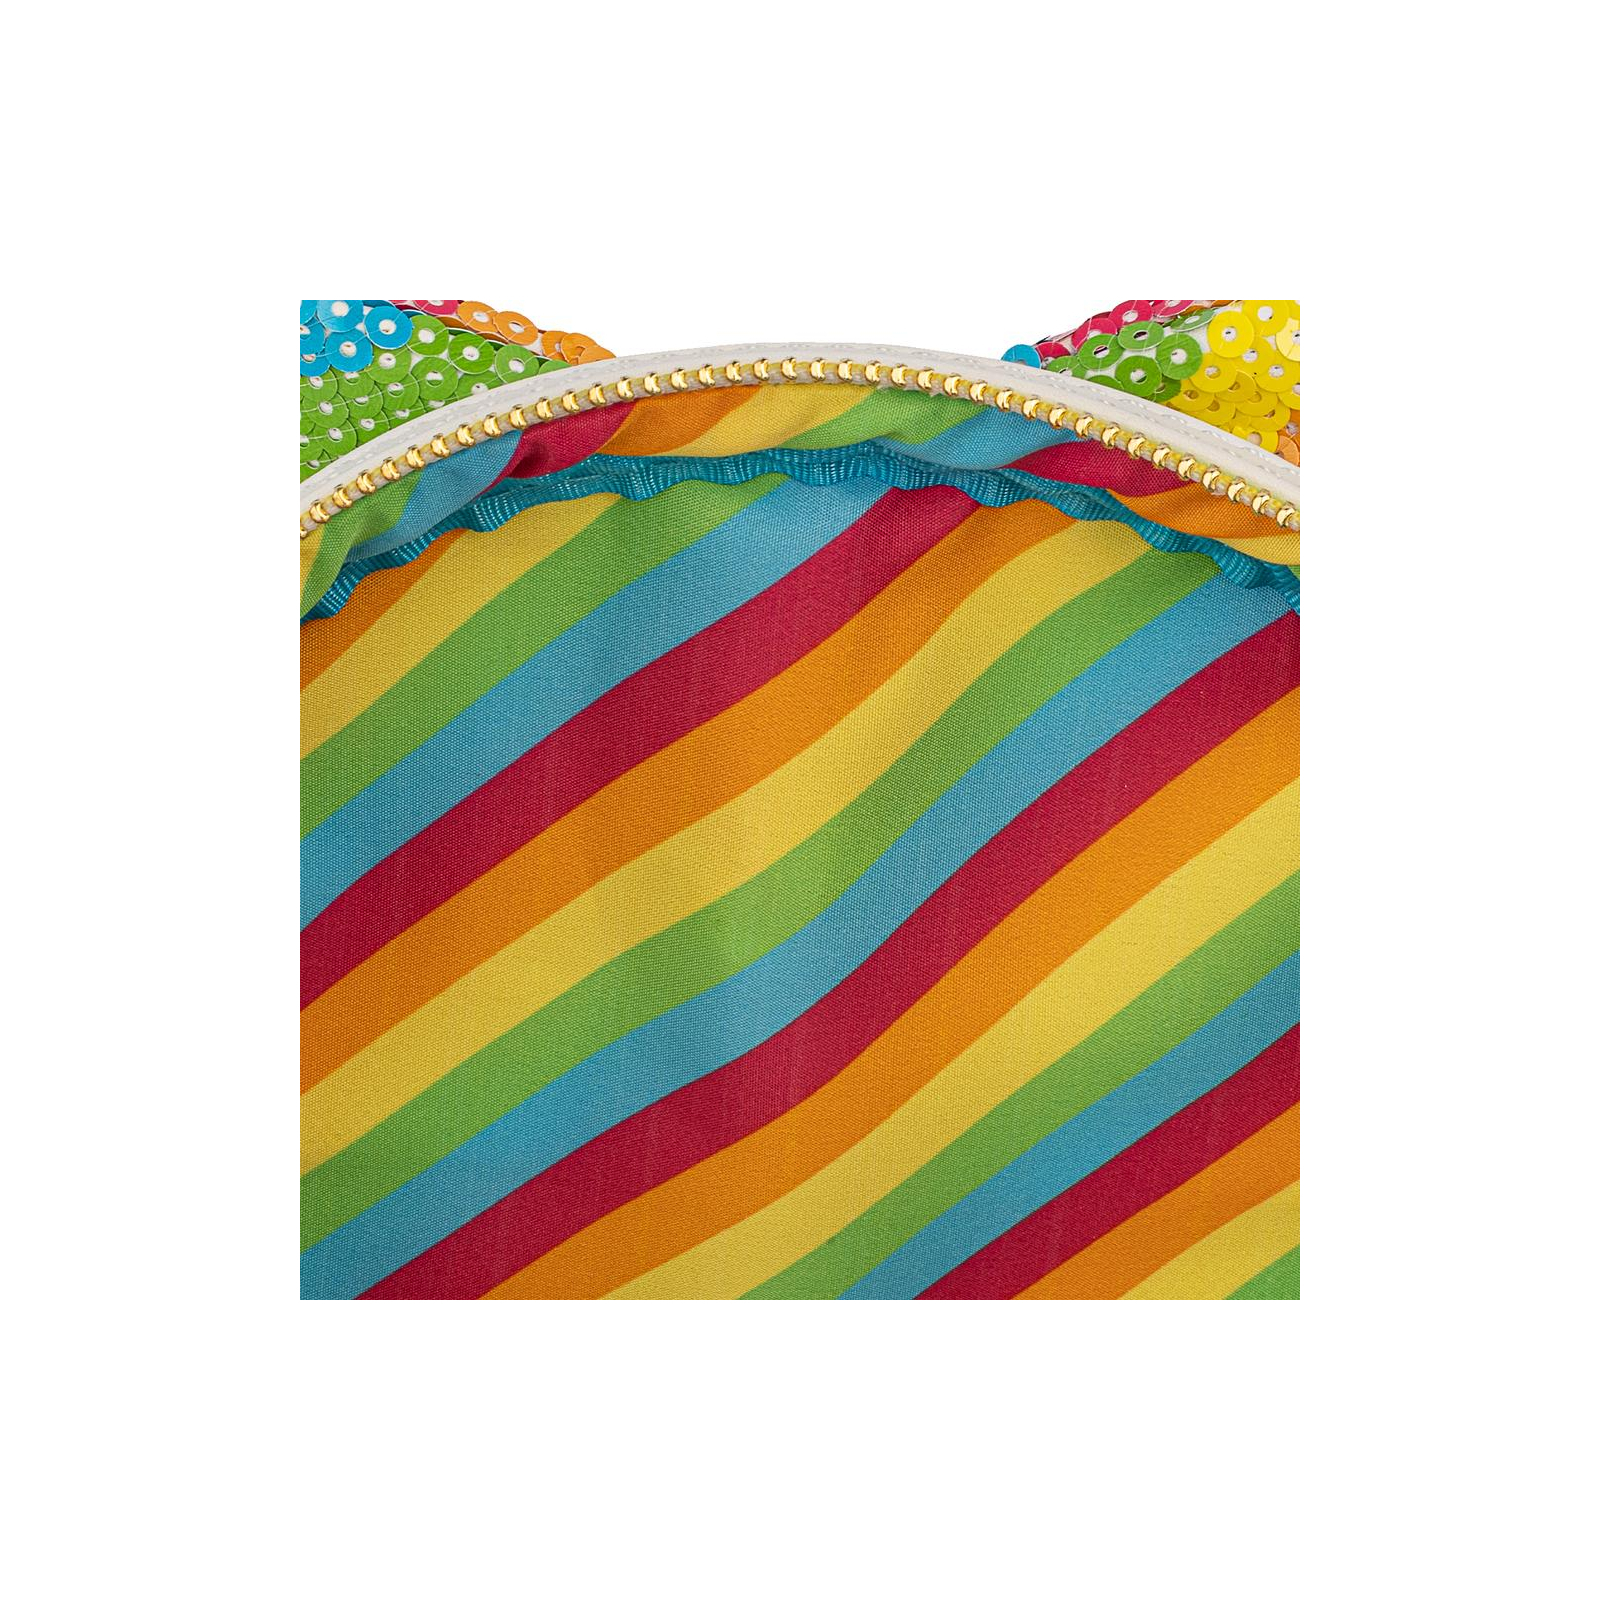 Рюкзак шкільний Loungefly Disney - Minnie Mouse Sequined Rainbow Mini Backpack (WDBK1659) зображення 5